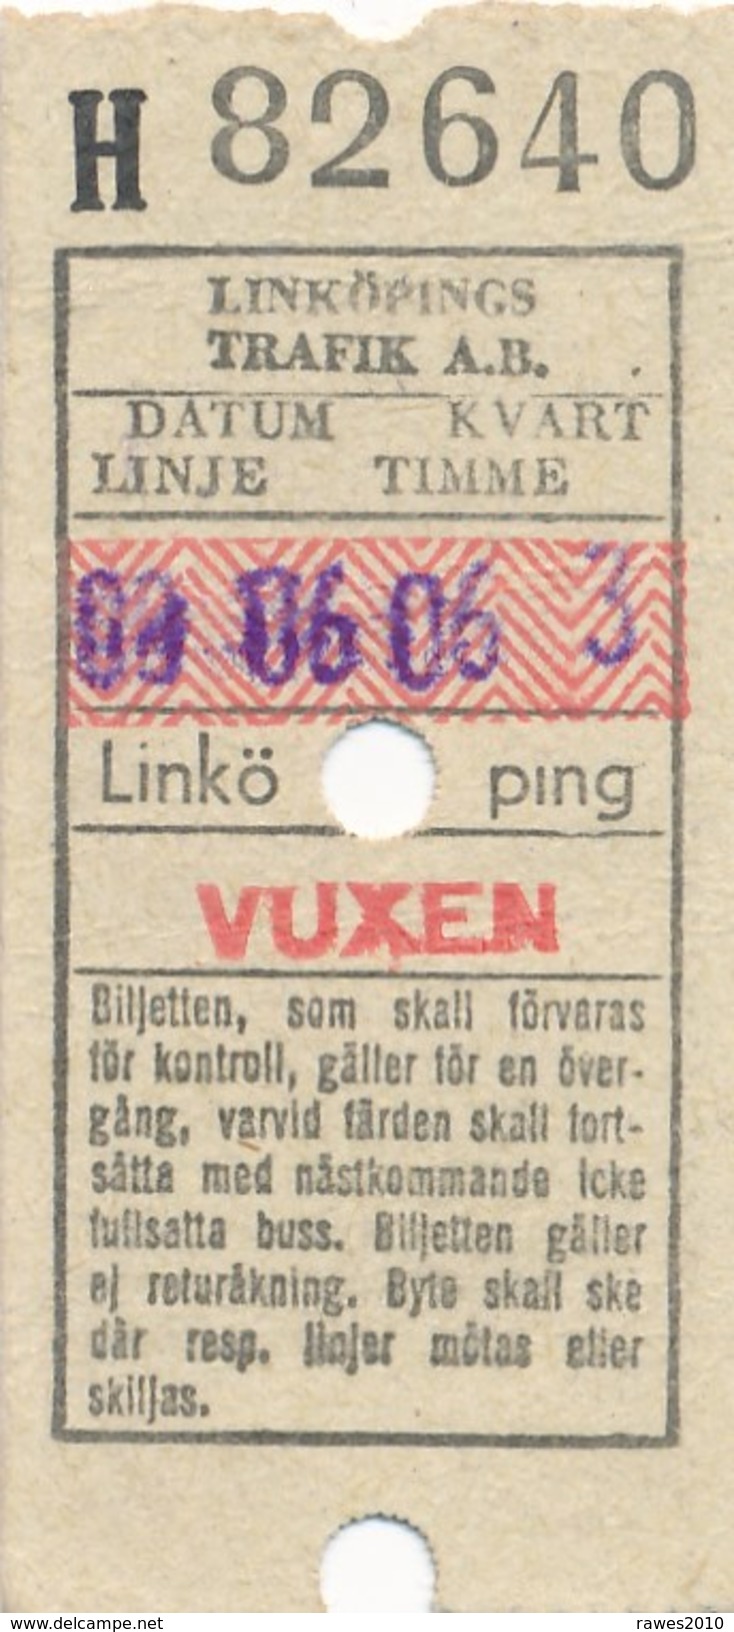 Schweden Fahrkarte Eisenbahn Linköping Trafik AB - Europa